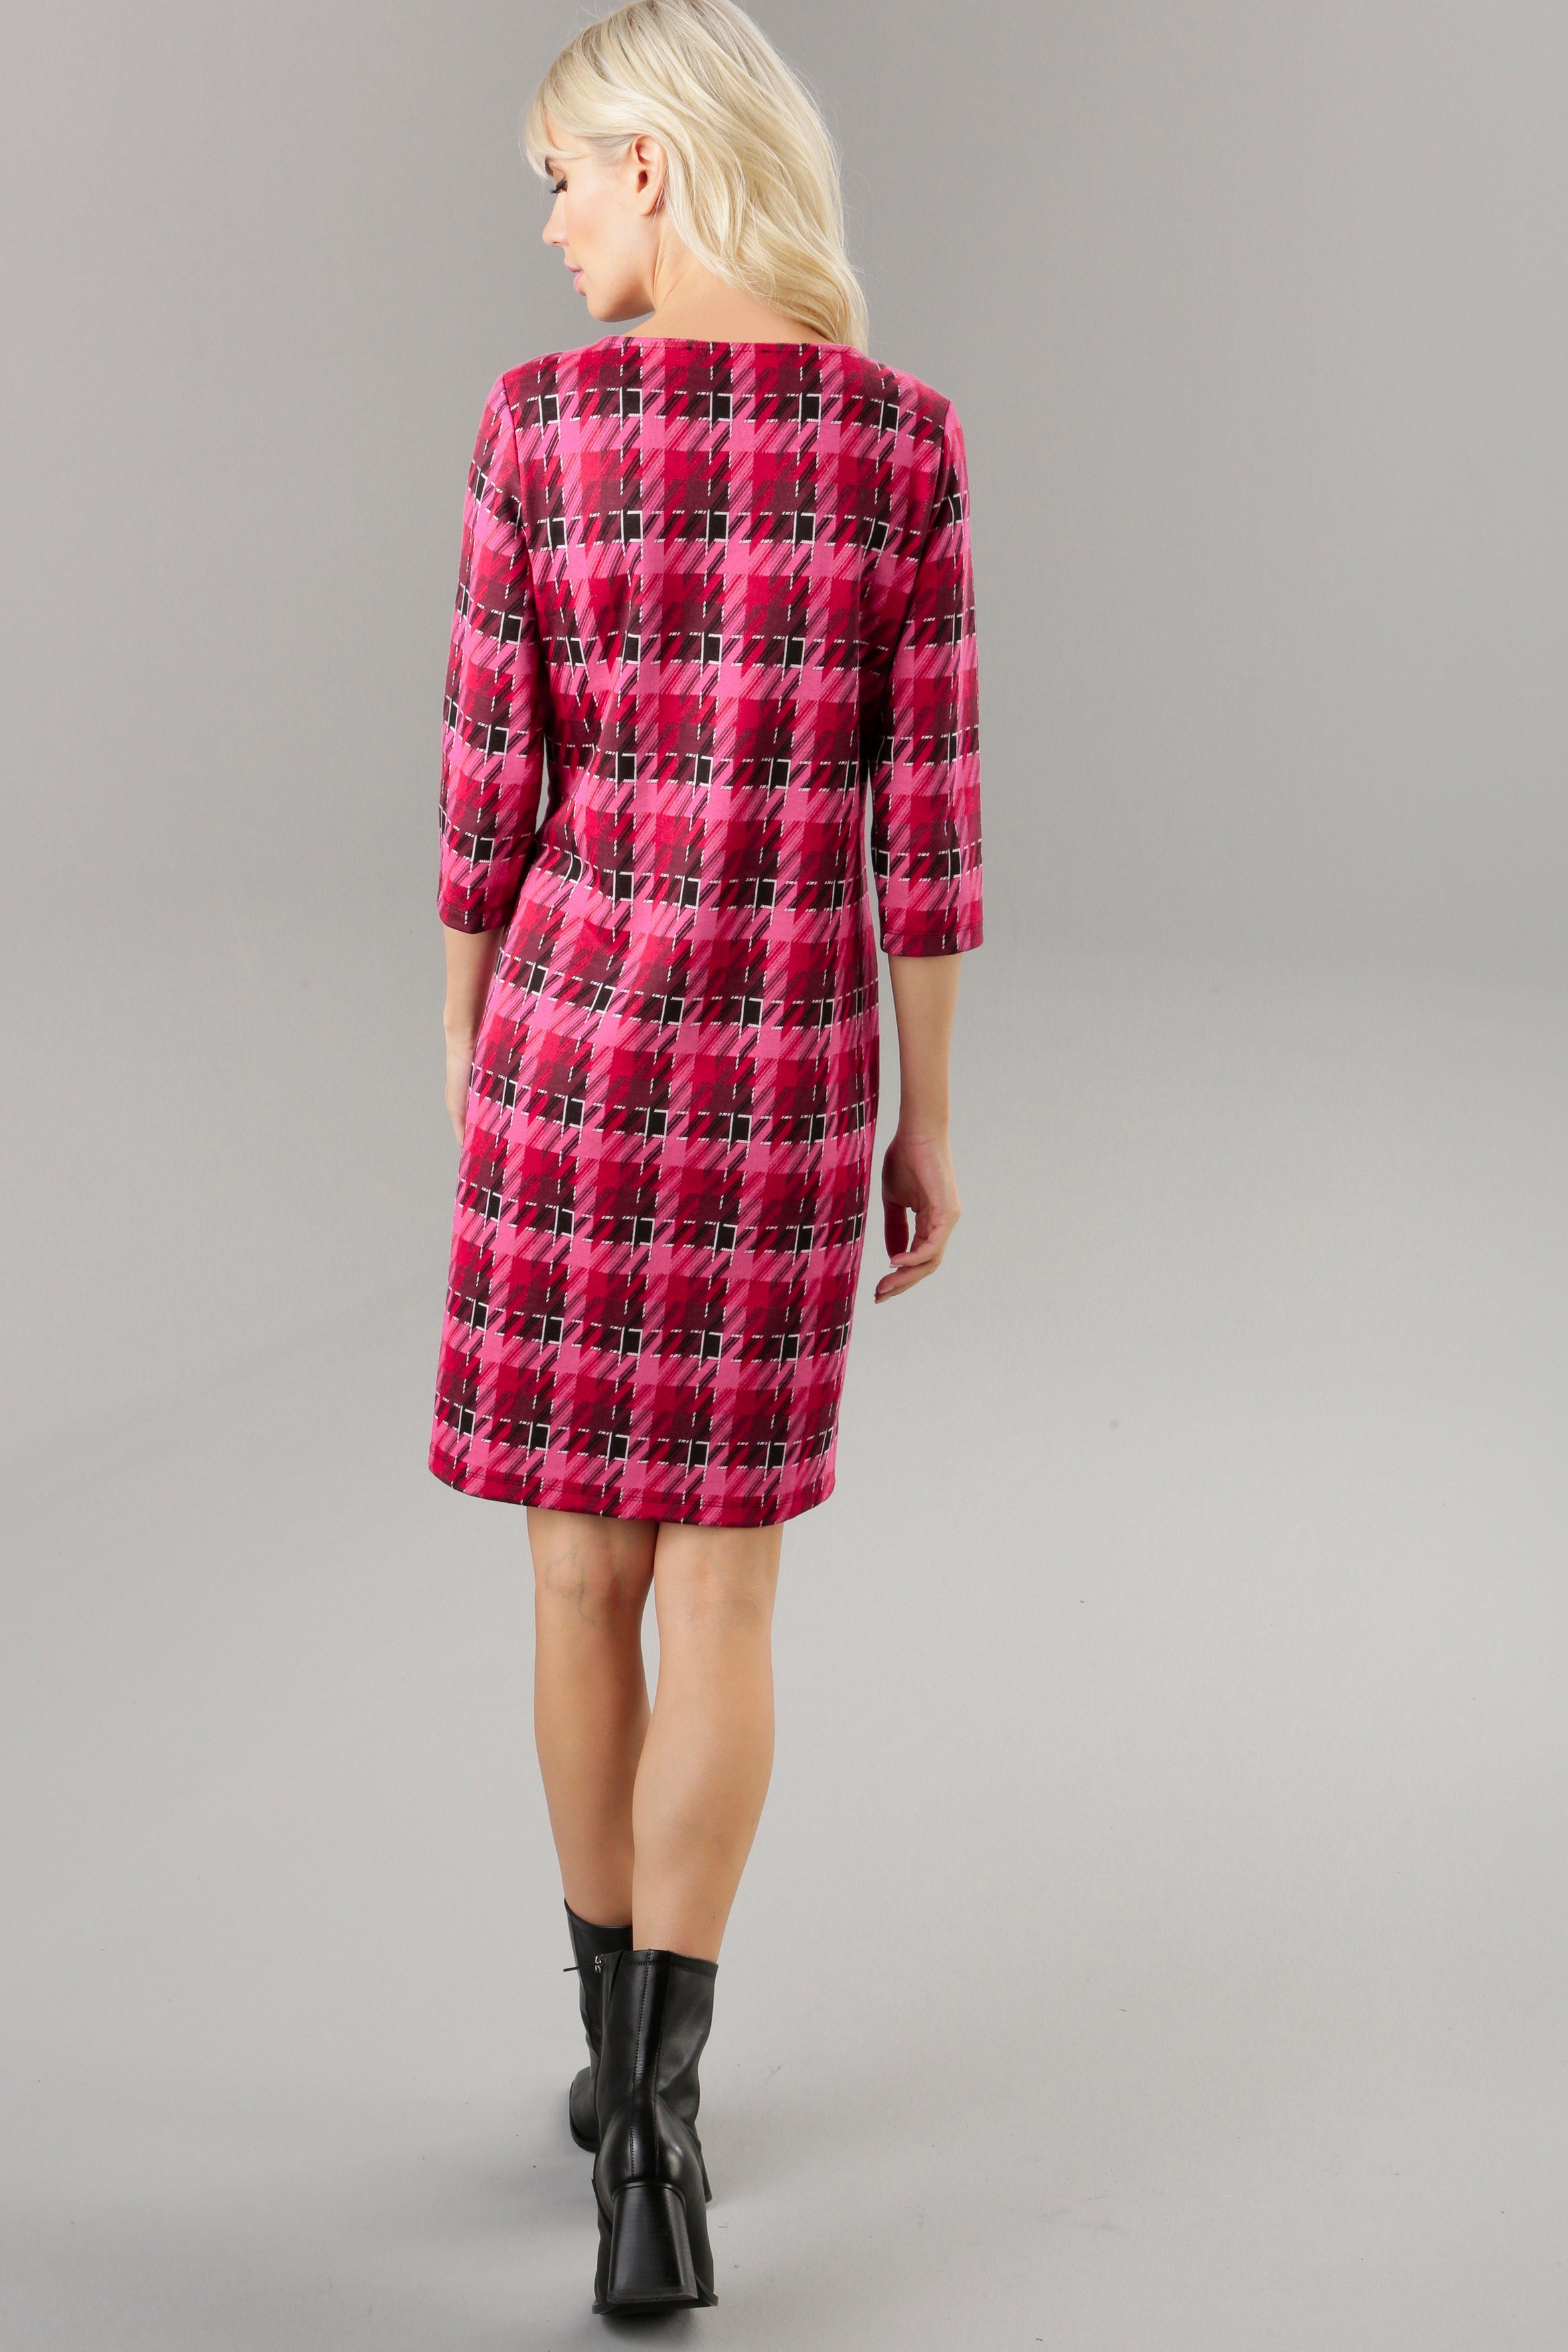 Aniston SELECTED Jerseykleid Allover-Muster Knallfarben in trendy mit